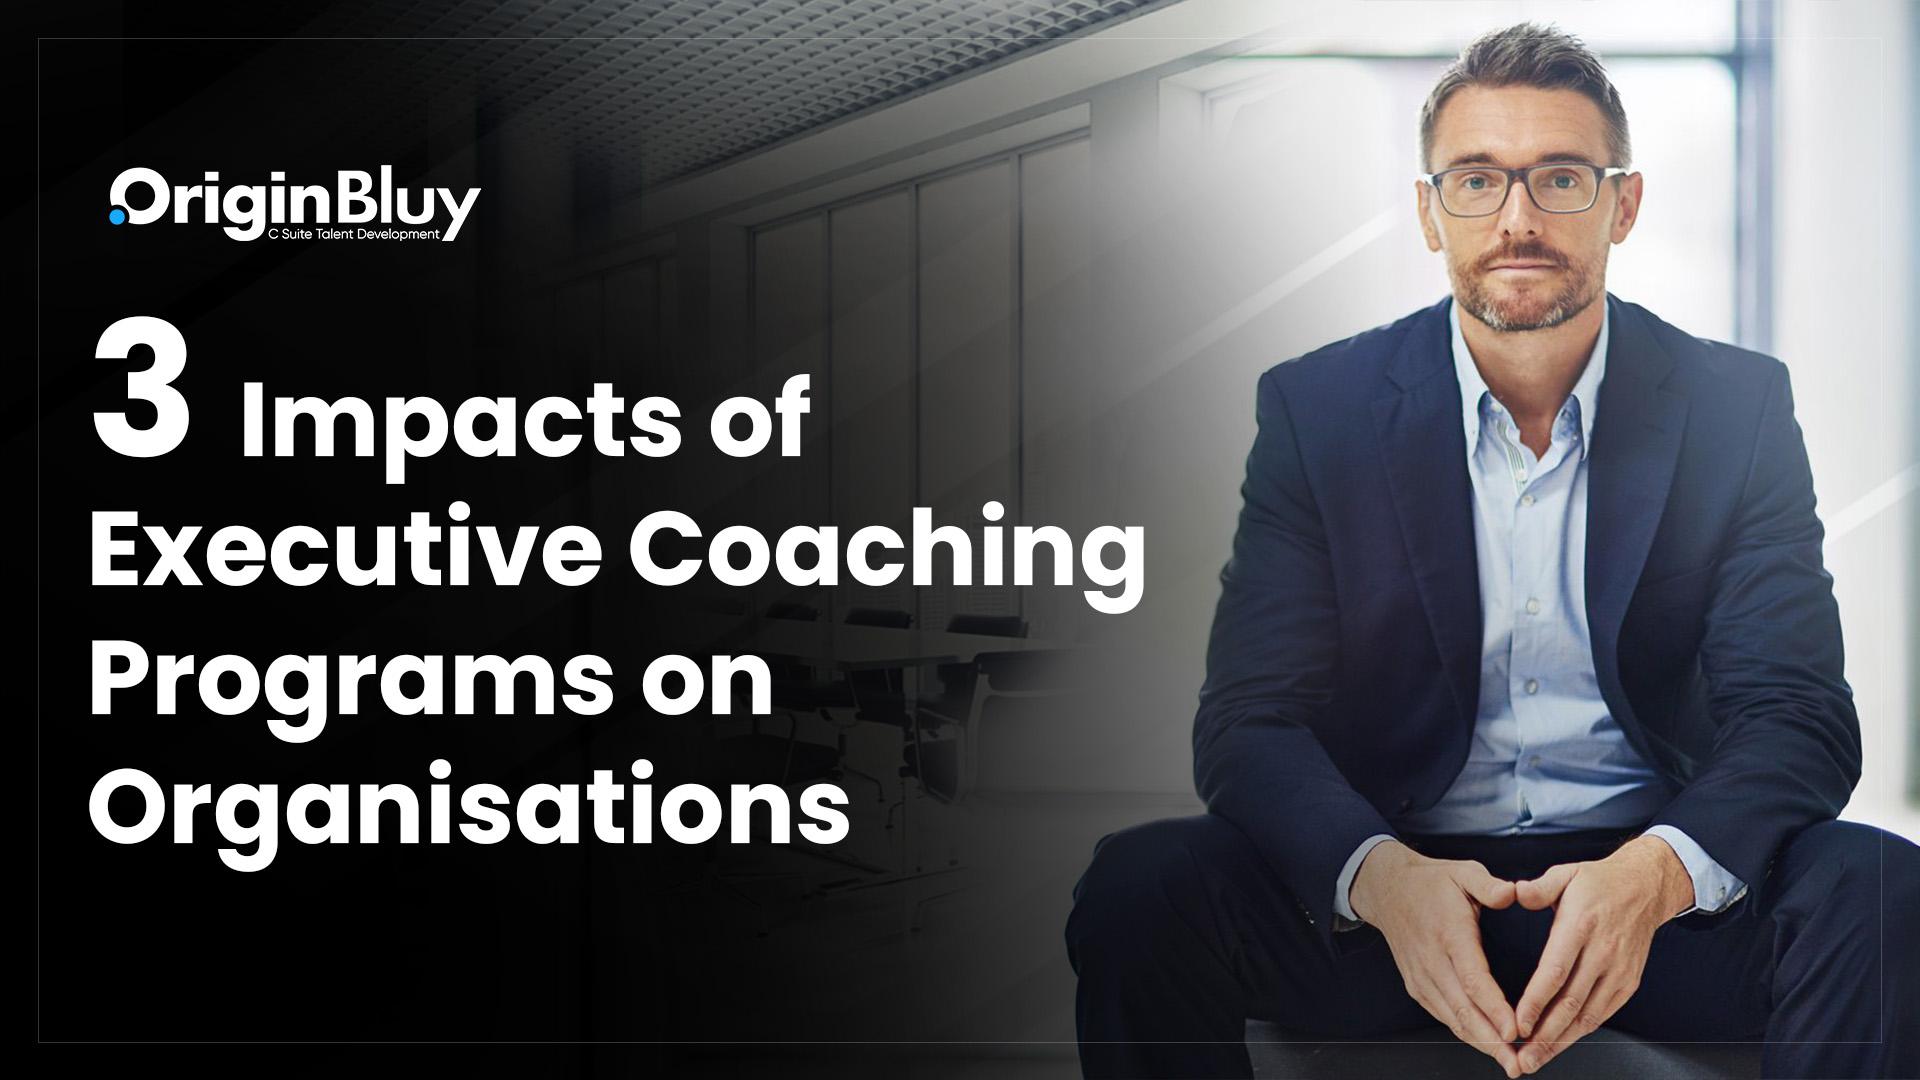 Executive Coaching, Executive Coaching Programs